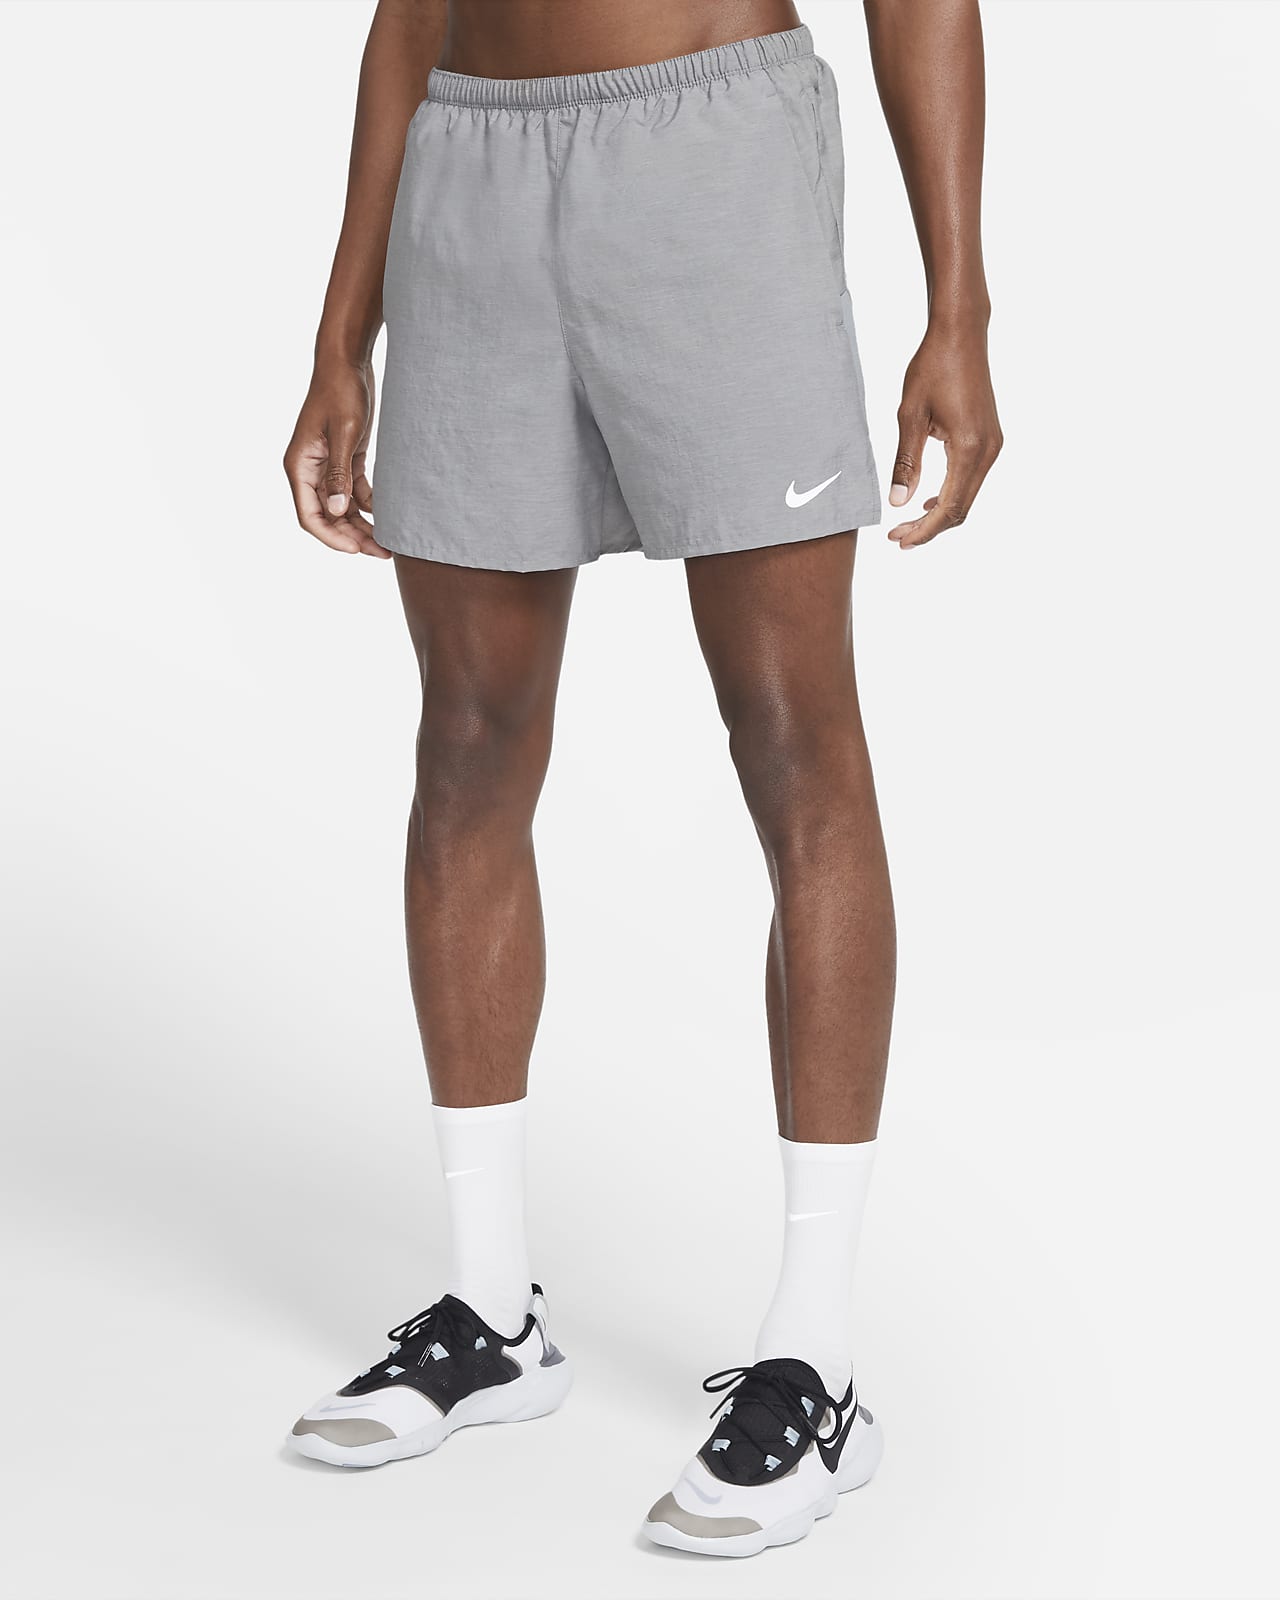 Pánské běžecké kraťasy Nike Challenger s všitými slipy (délka 13 cm)